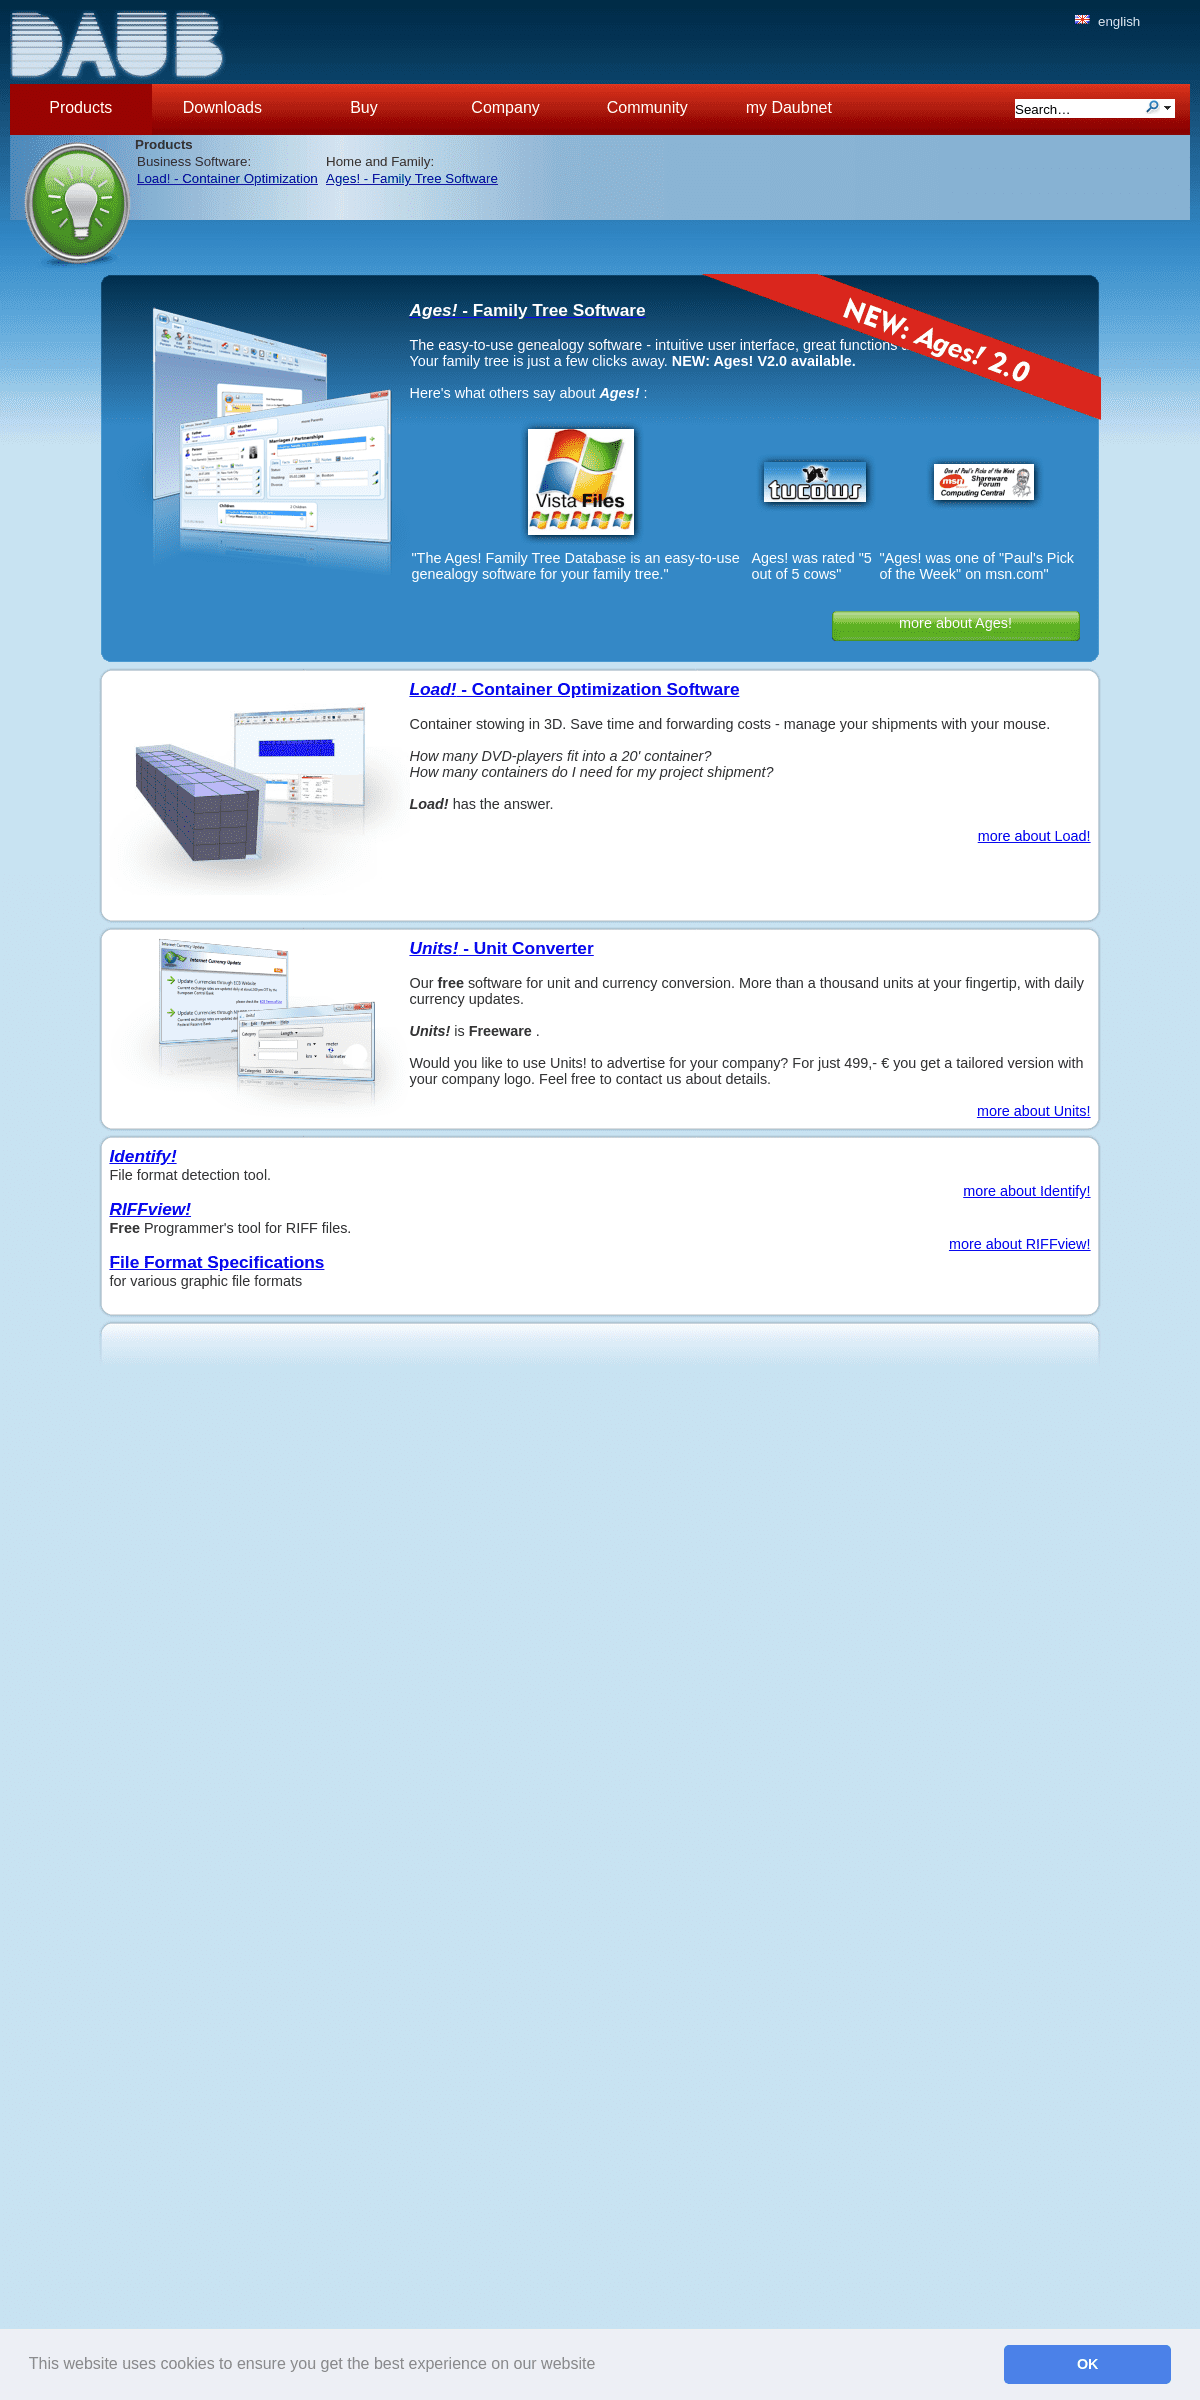 A complete backup of daubnet.com